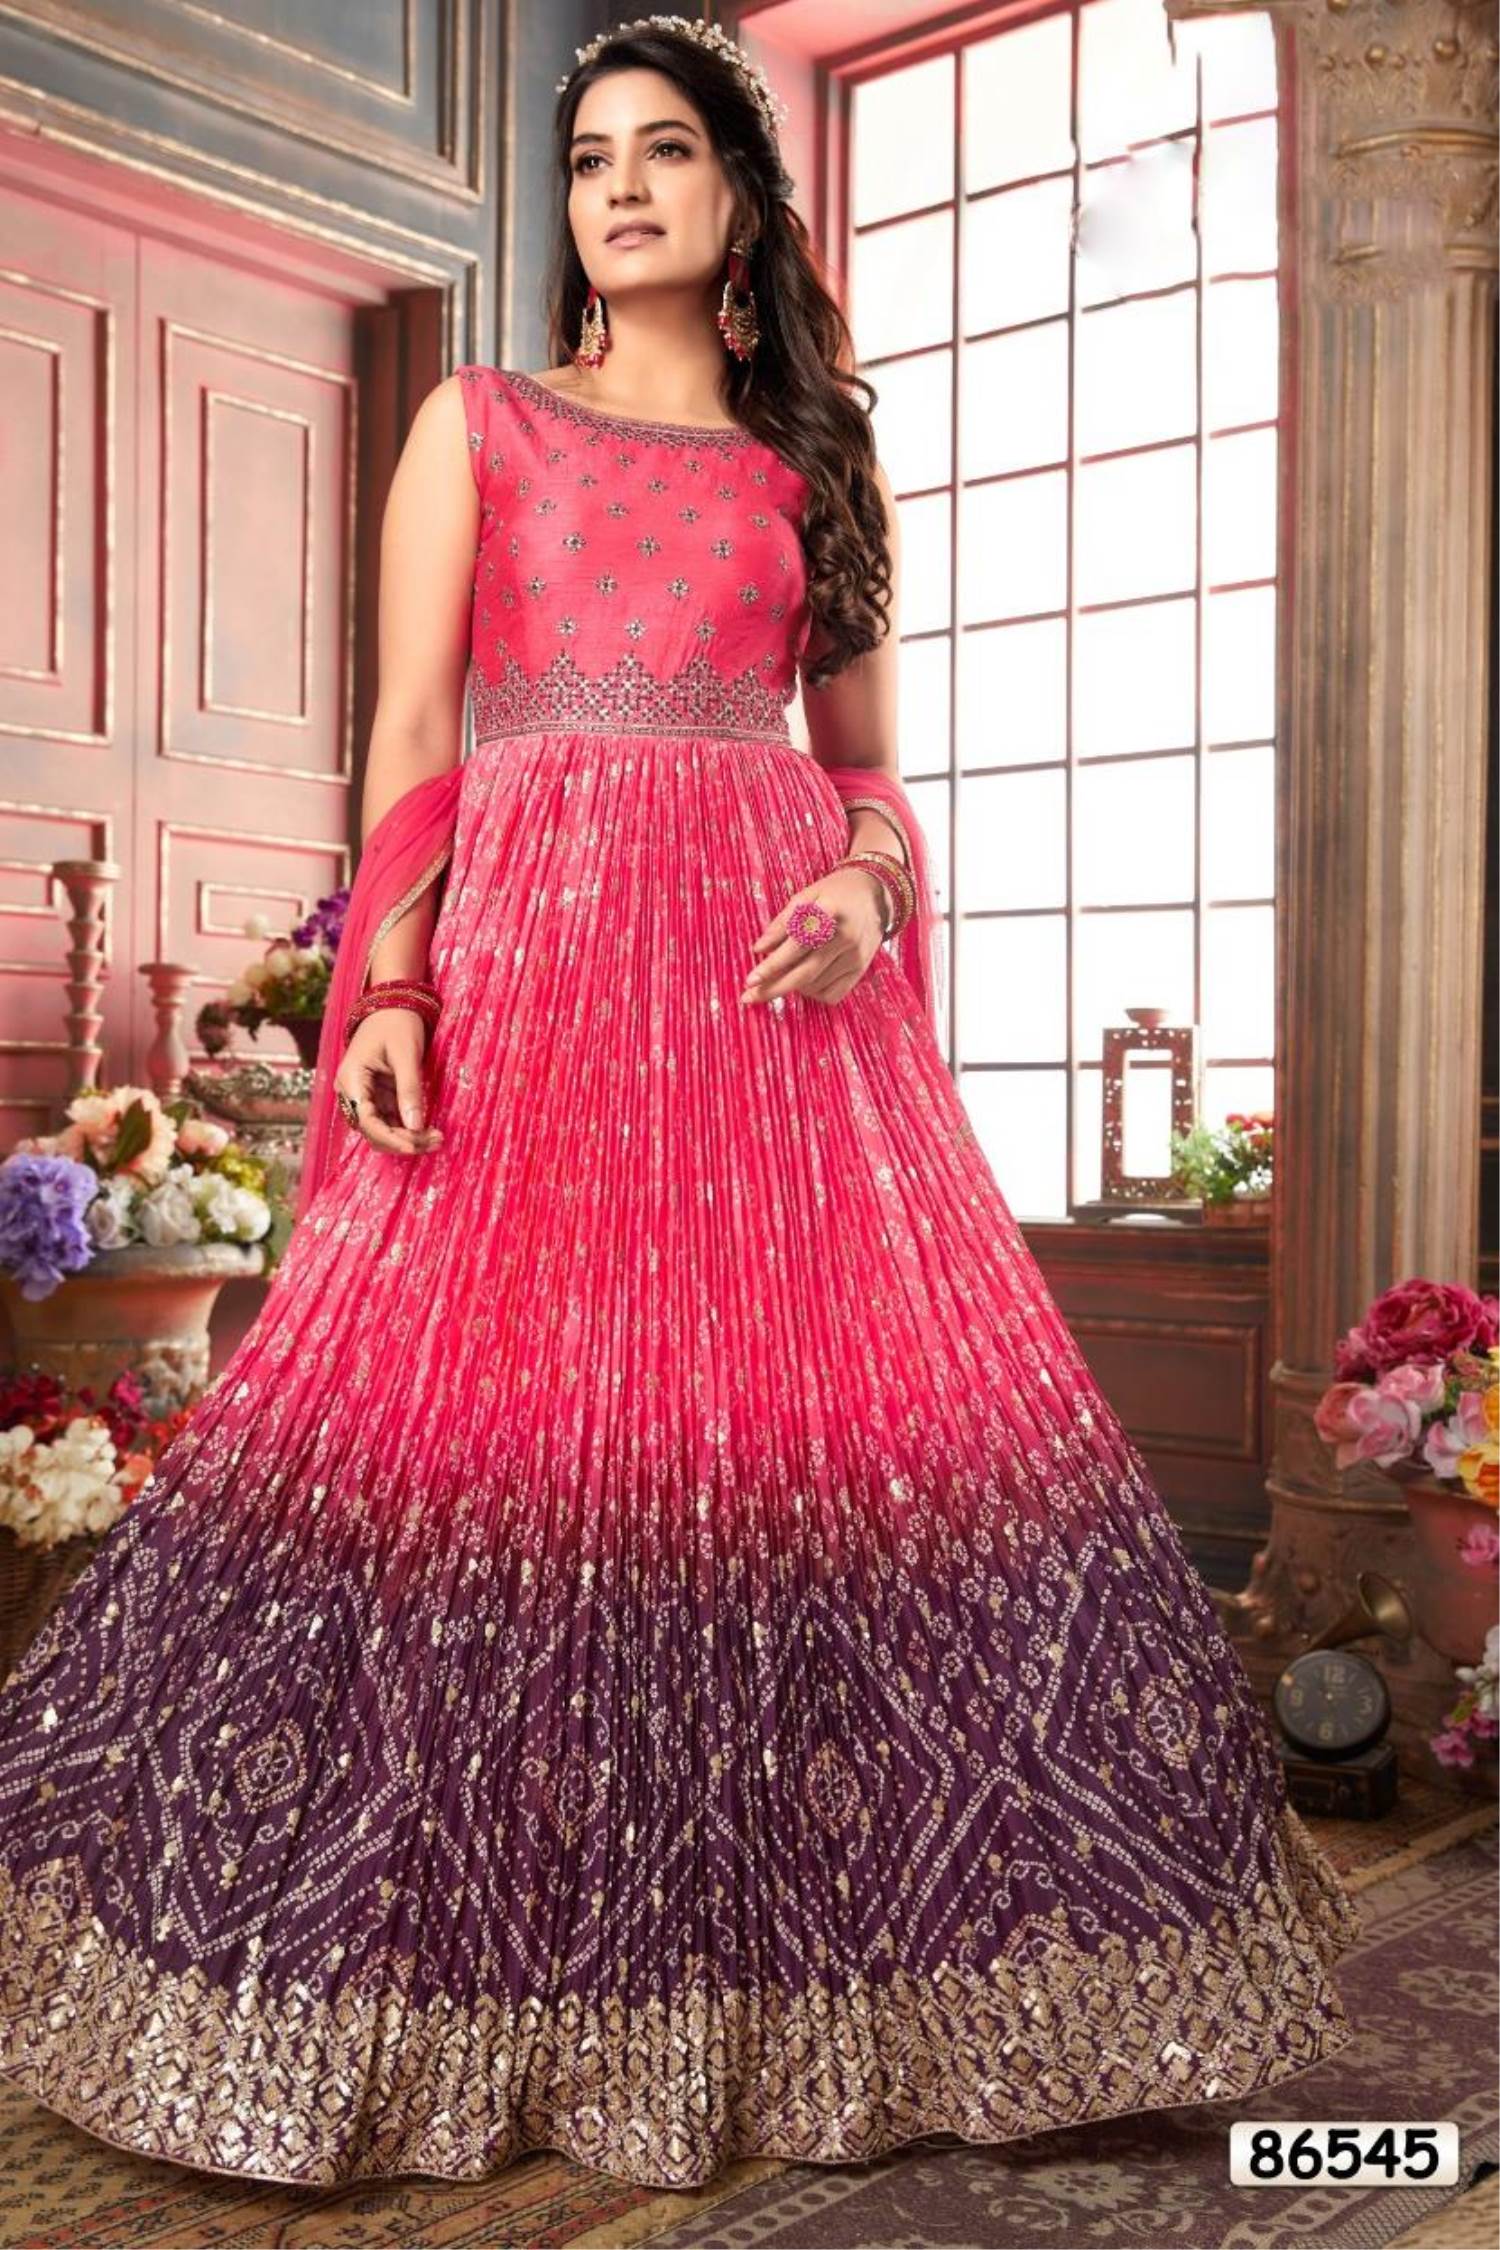 Light Gajri Stylish Long Wedding Gown wedding gowns are very beautiful